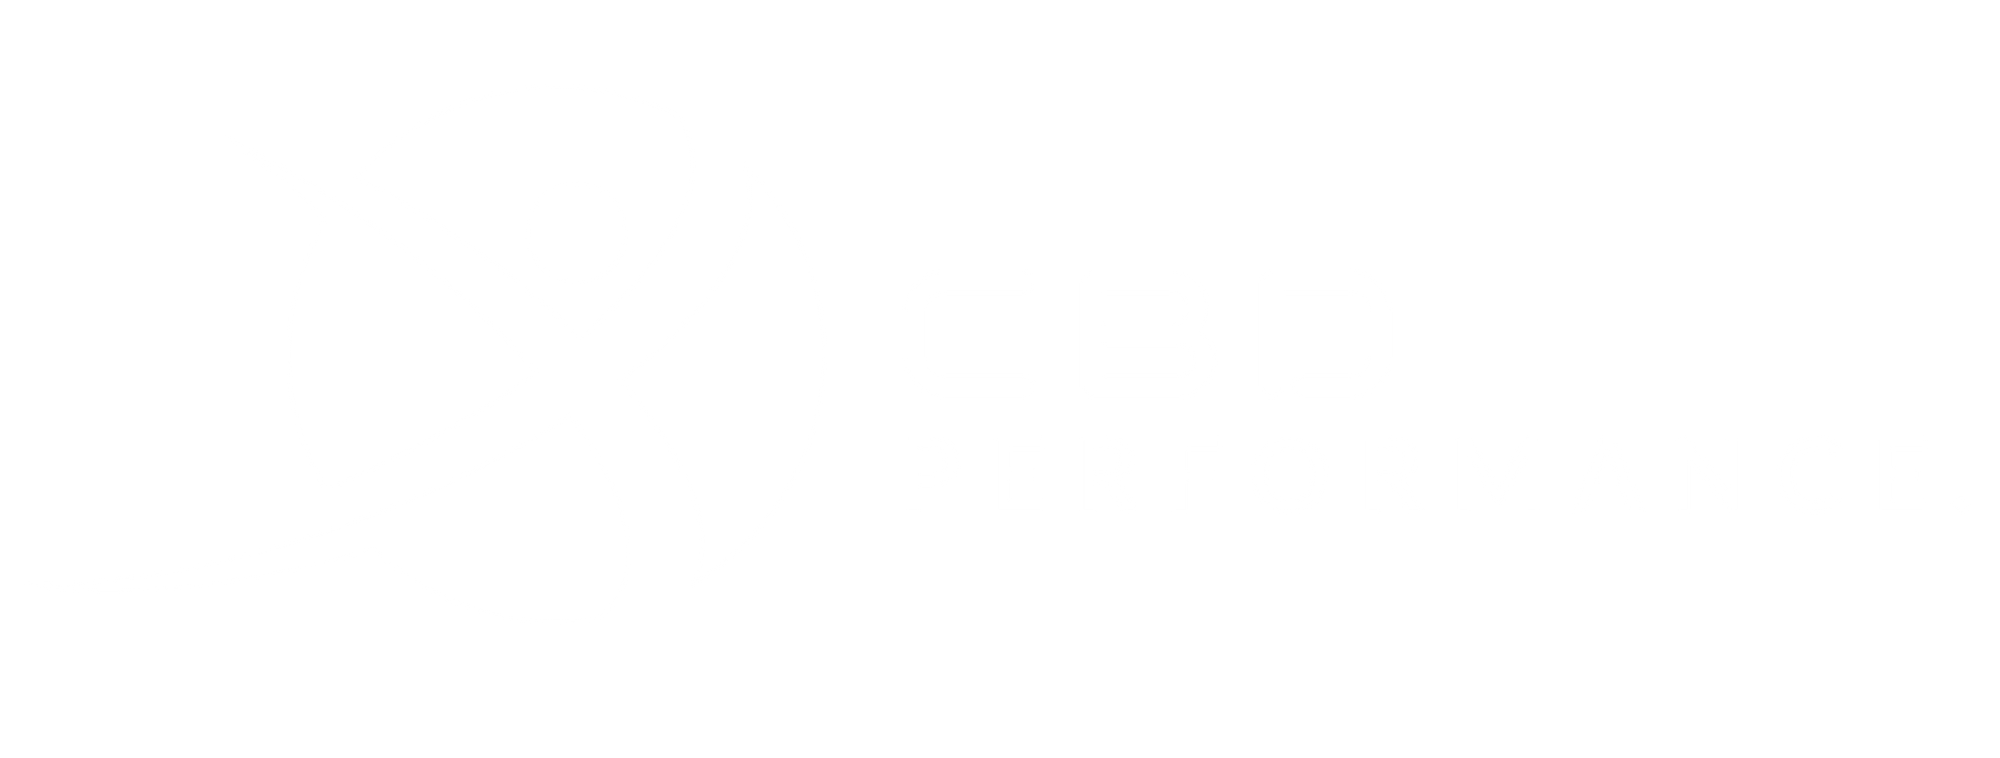 CBD performance logo white